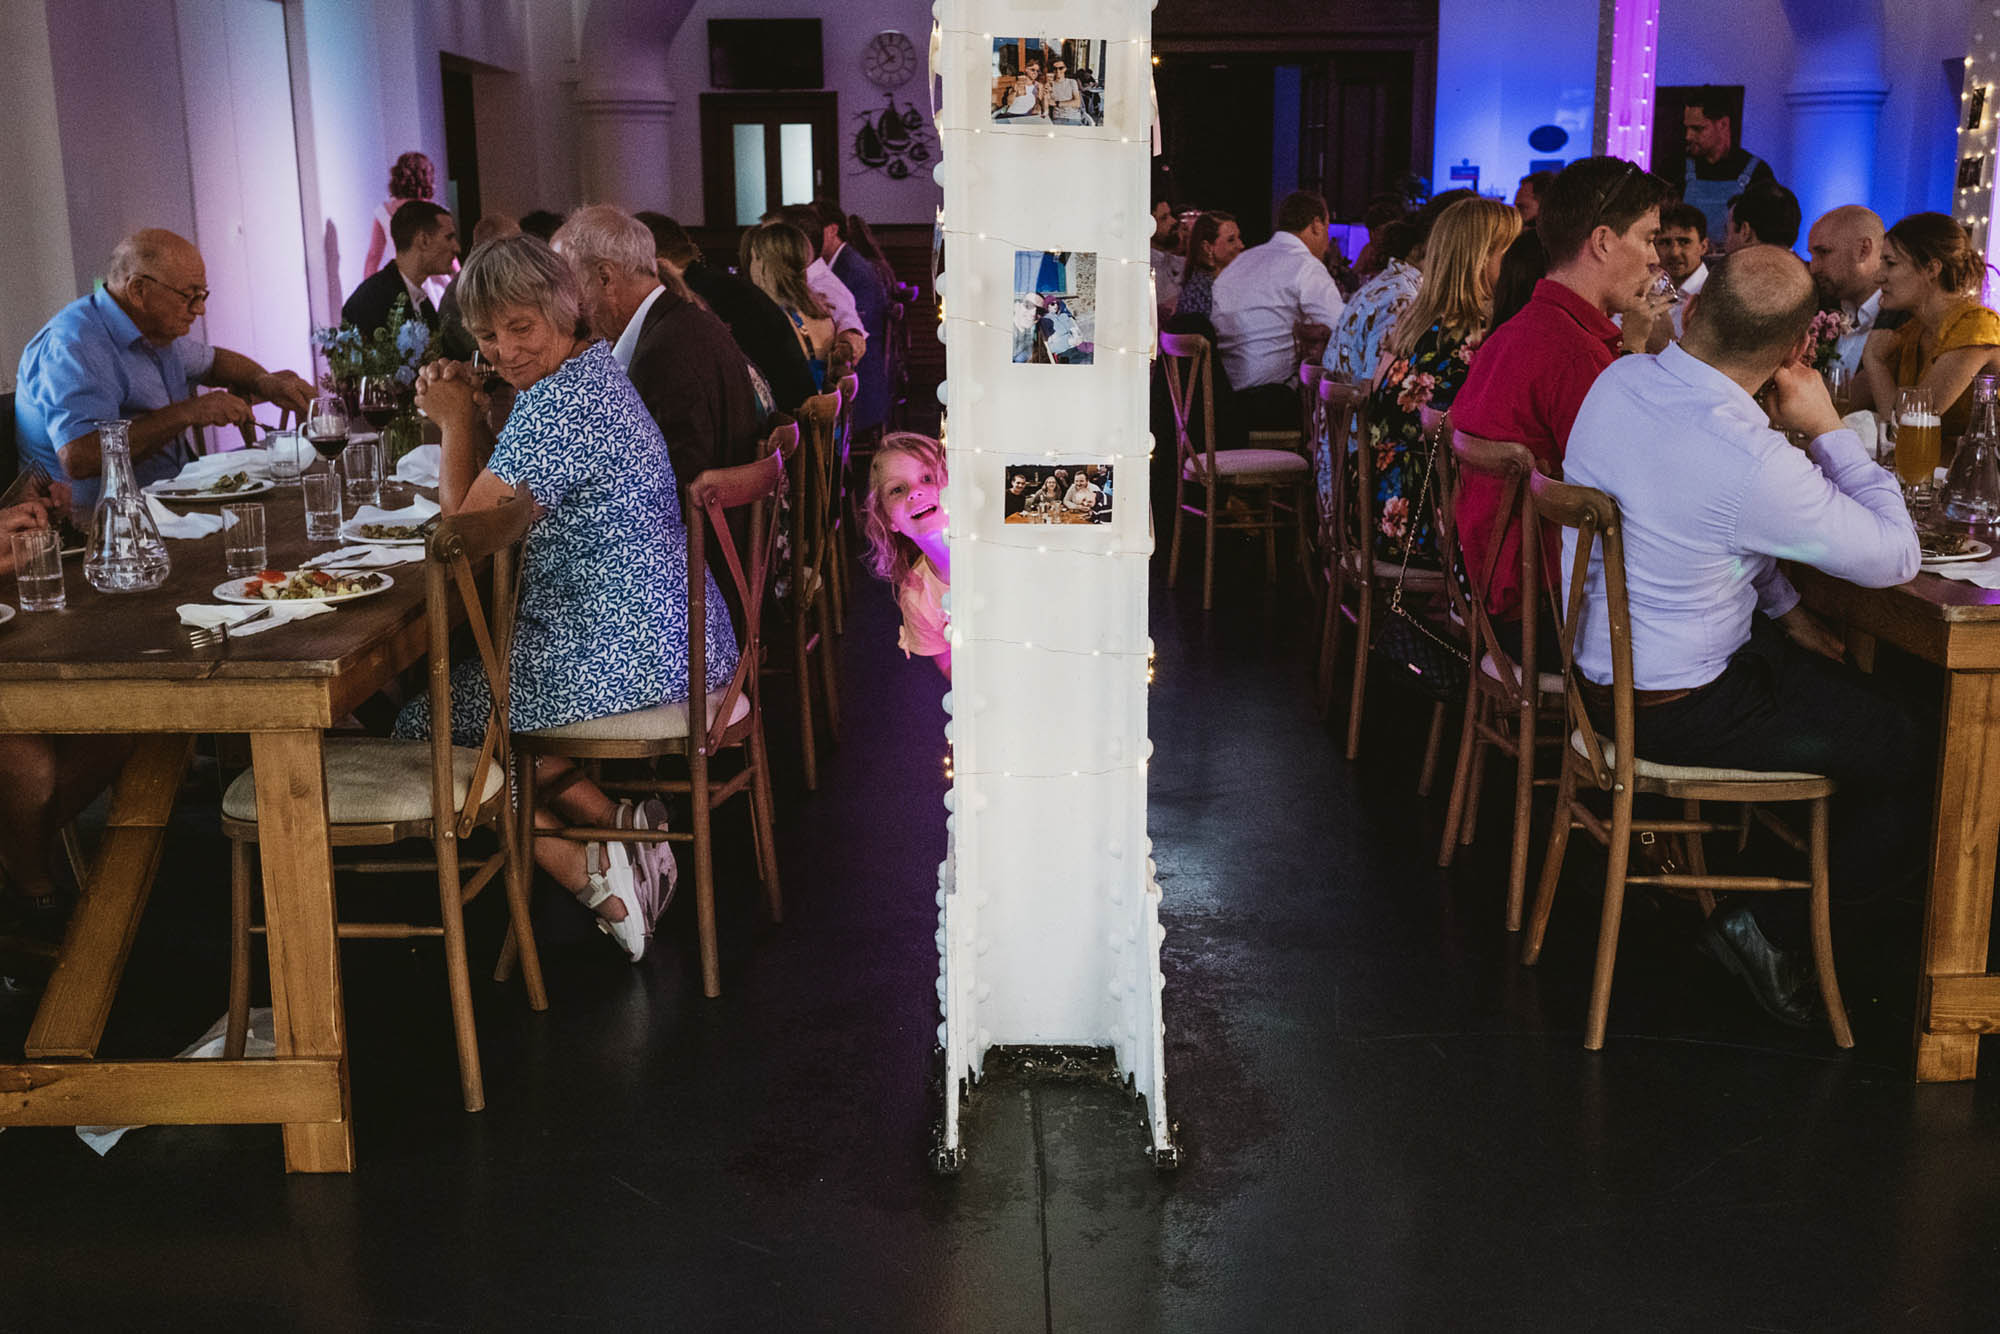 York Place Studios are award winning wedding photojournalists based in London